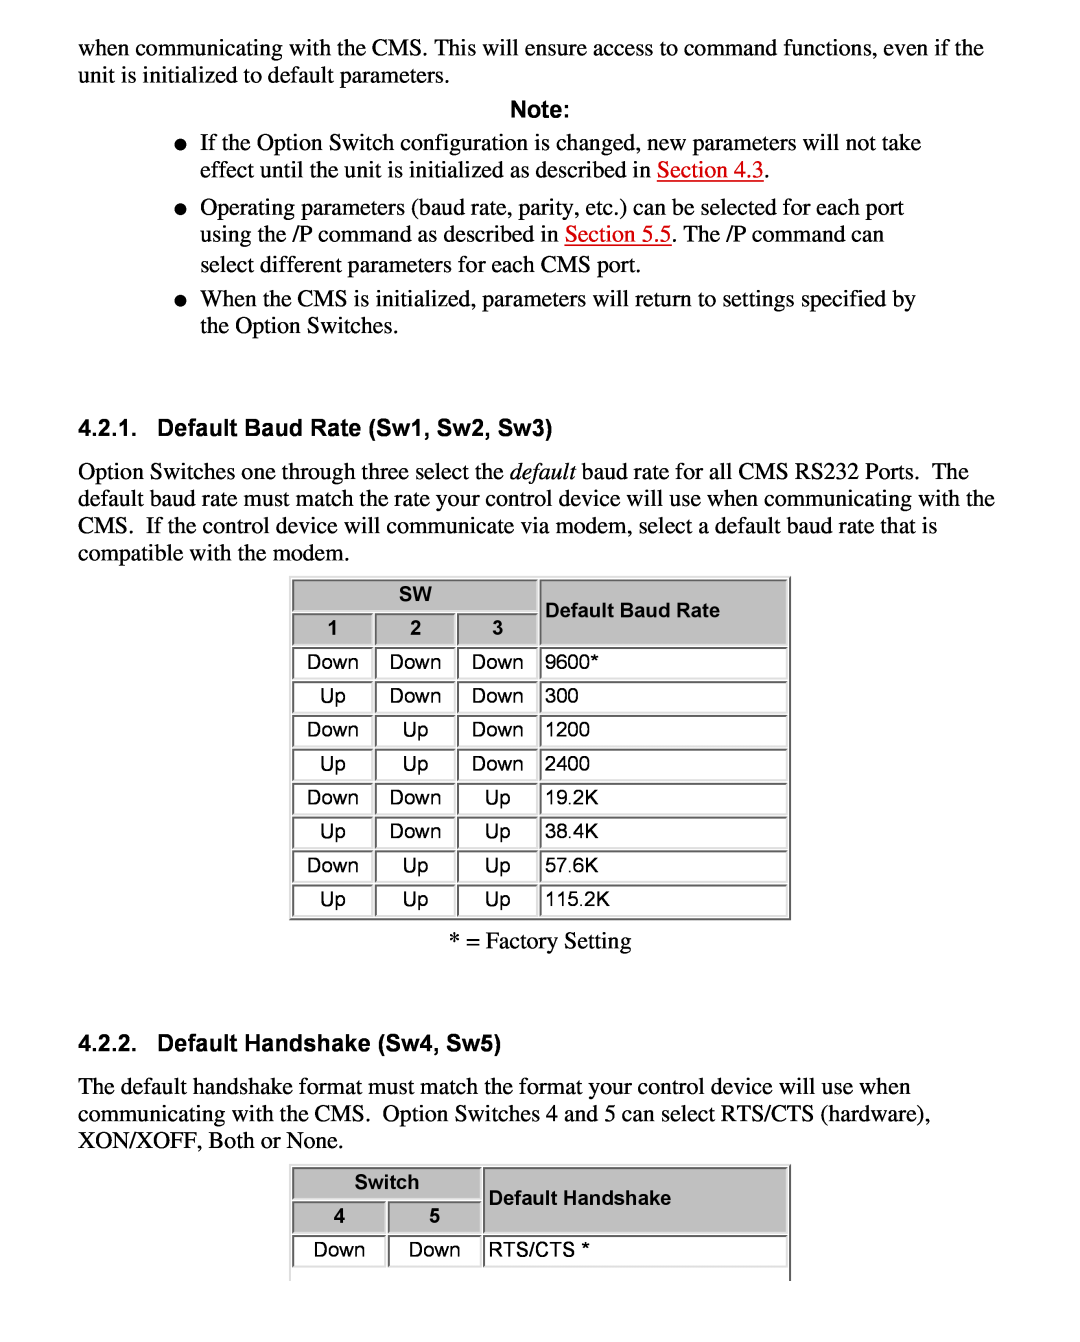 Western Telematic CMS-16 manual Default Baud Rate Sw1, Sw2, Sw3, Default Handshake Sw4, Sw5 